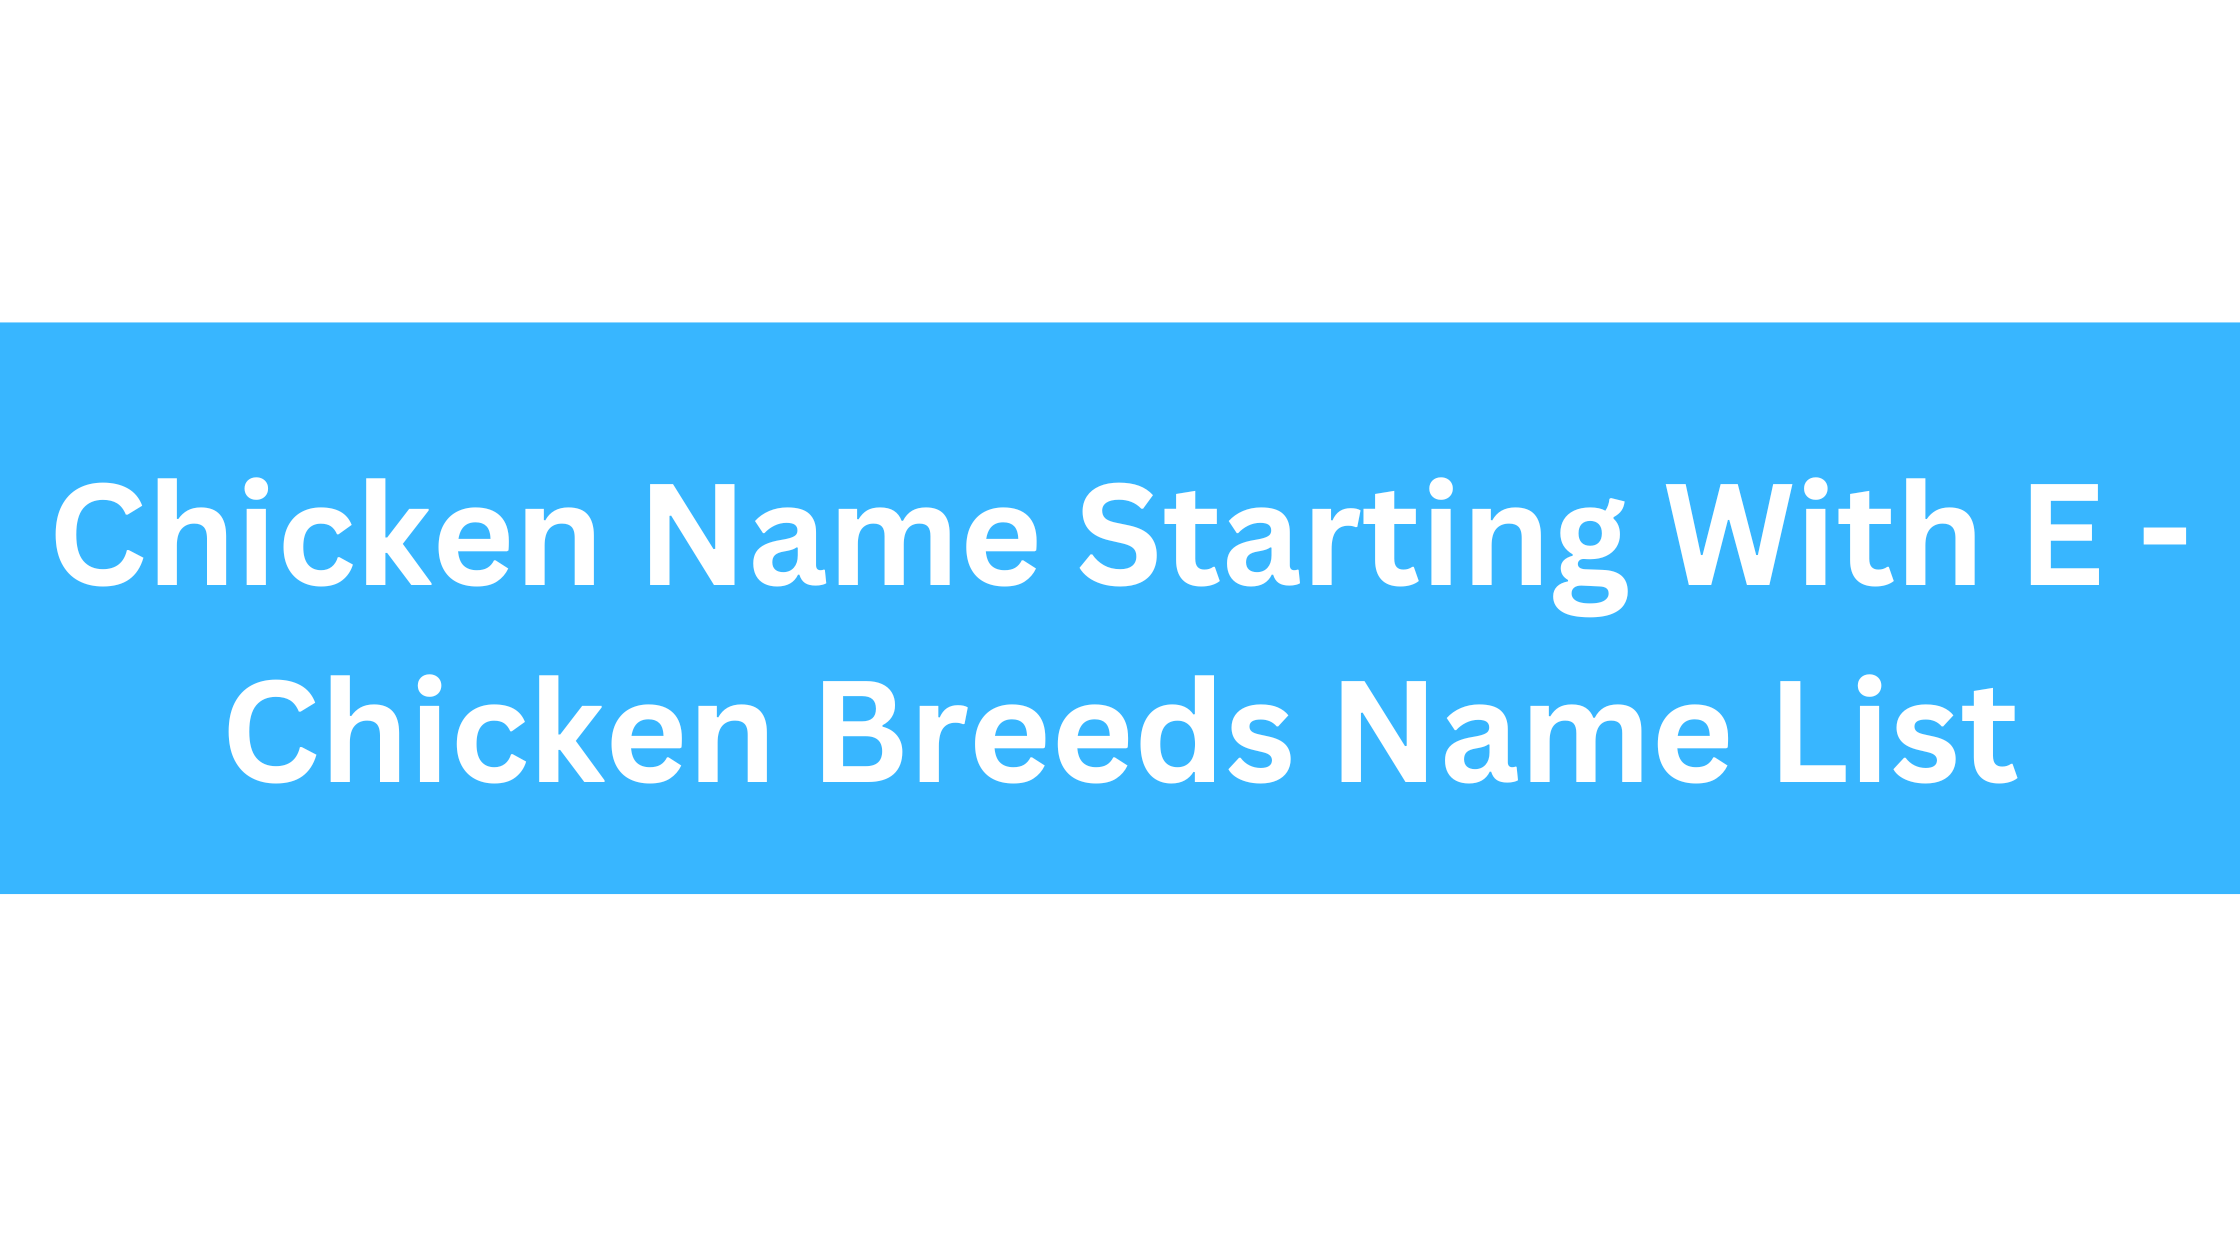 Chicken Breeds That Start With E